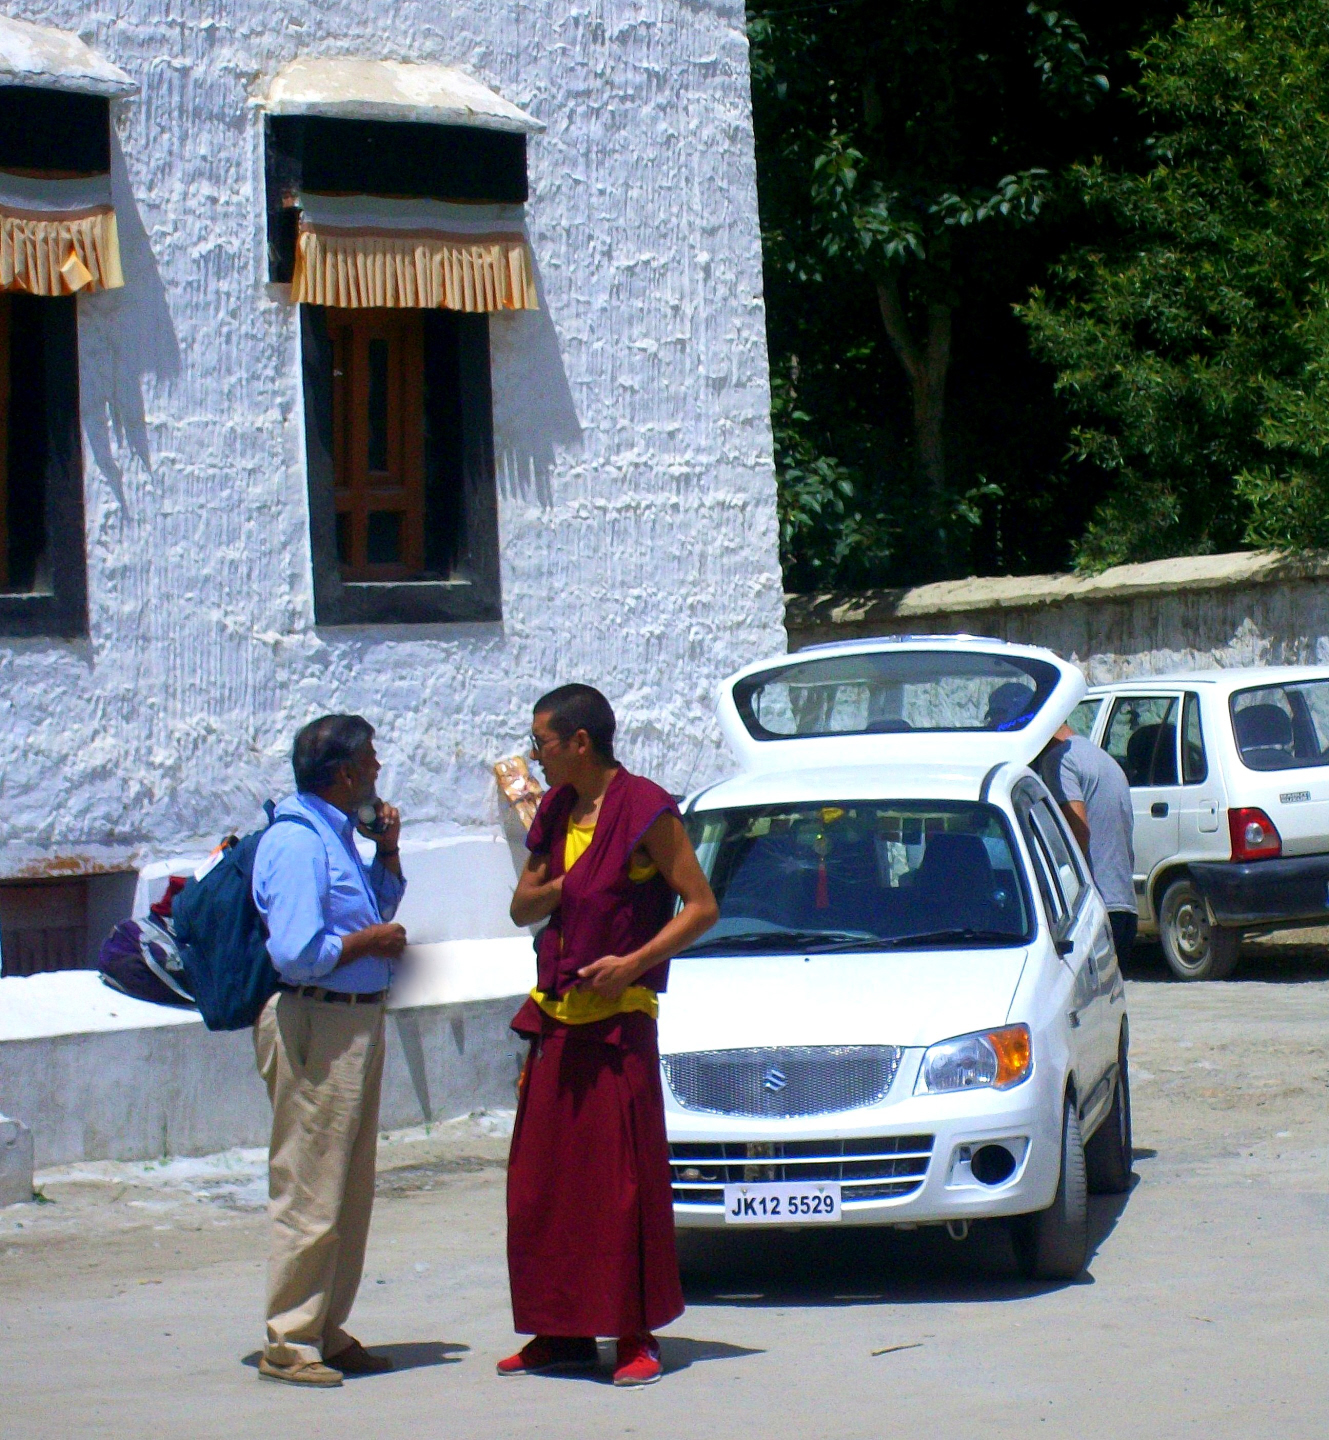 Ajata Looking for an Old Friend, Lama Chomspal at Sanker Gompa (monastery)- Leh, Ladakh